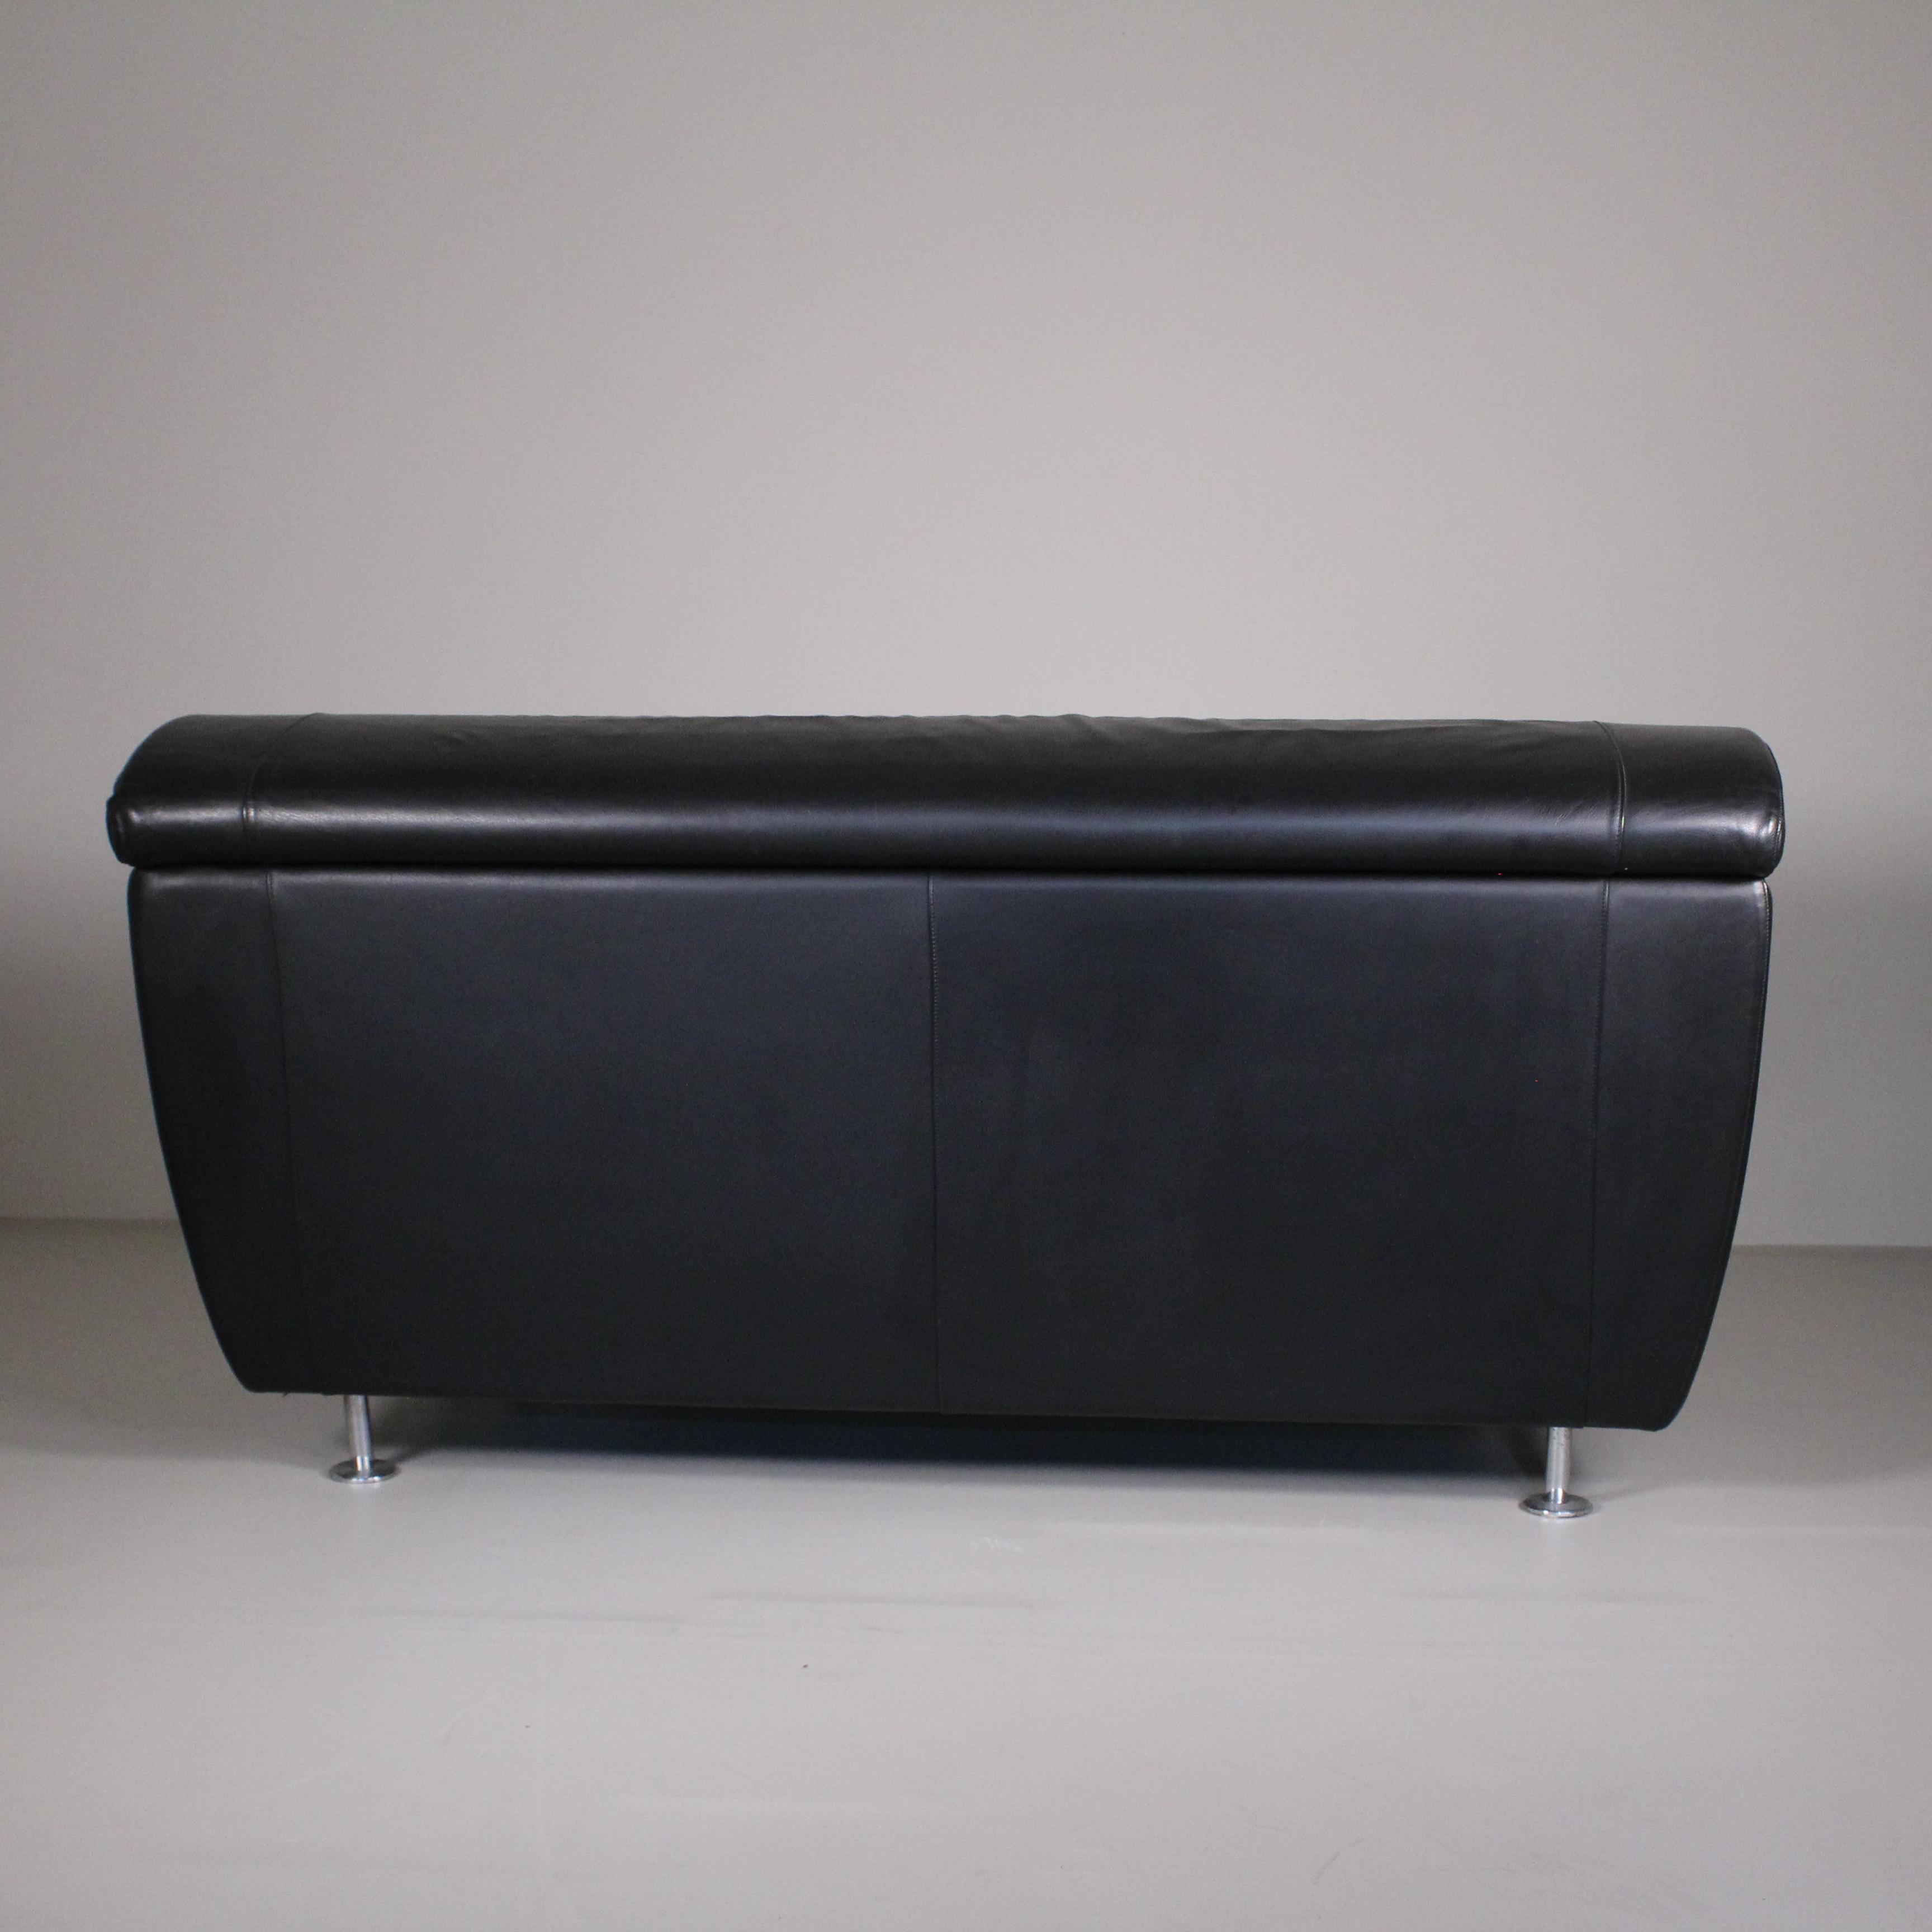  Balzo Loveseat black sofa, Massimo Iosa Ghini, Moroso, 1987 For Sale 1